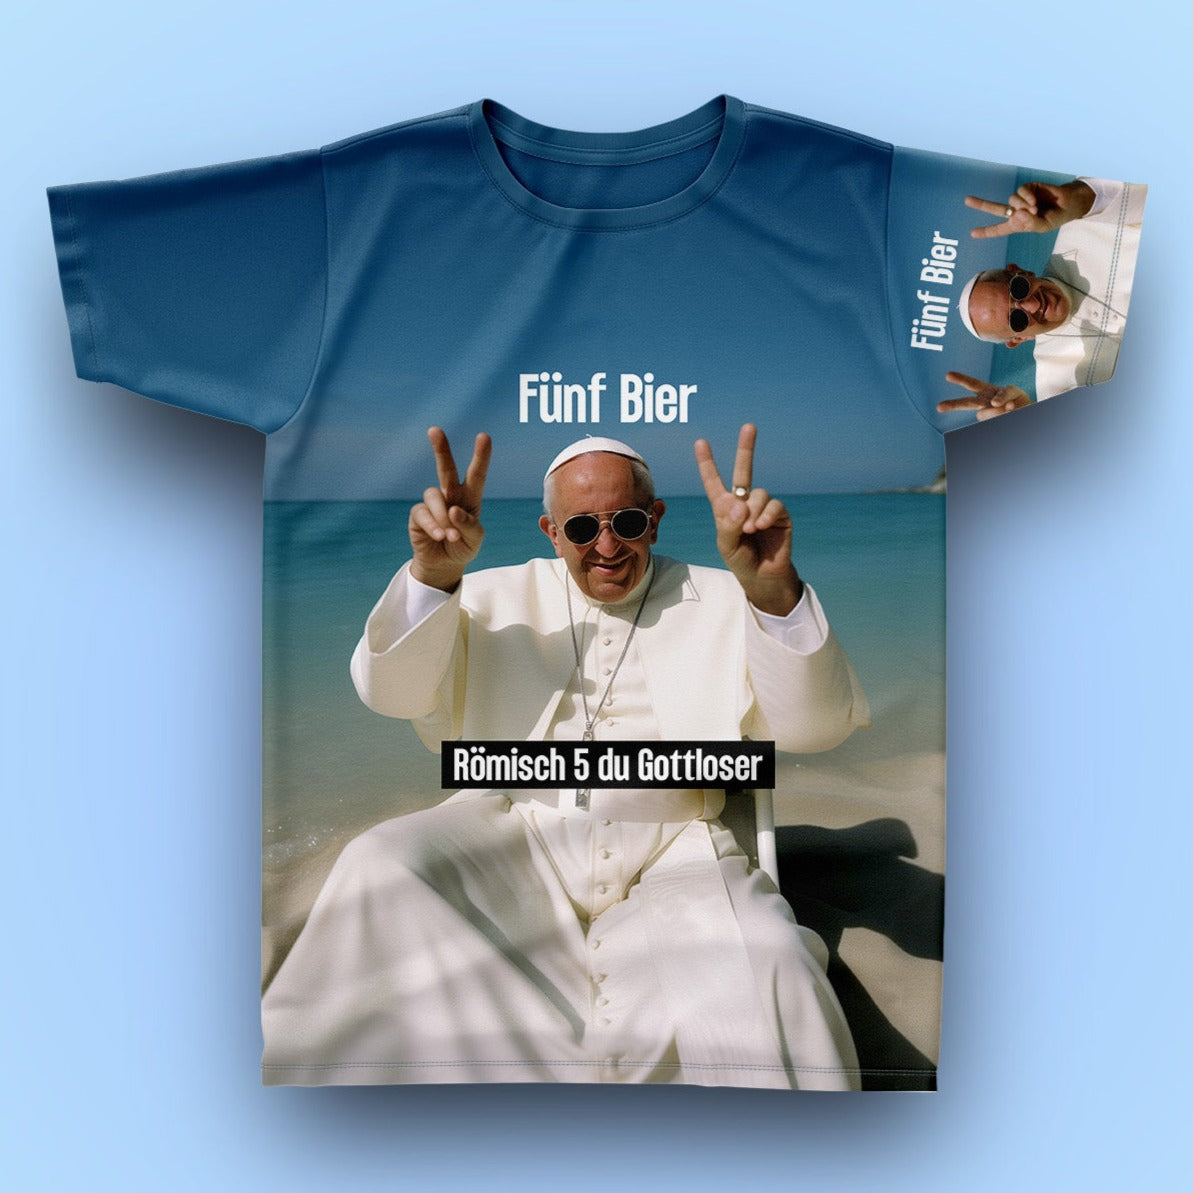 FÜNF BIER - Fullprint Tshirt